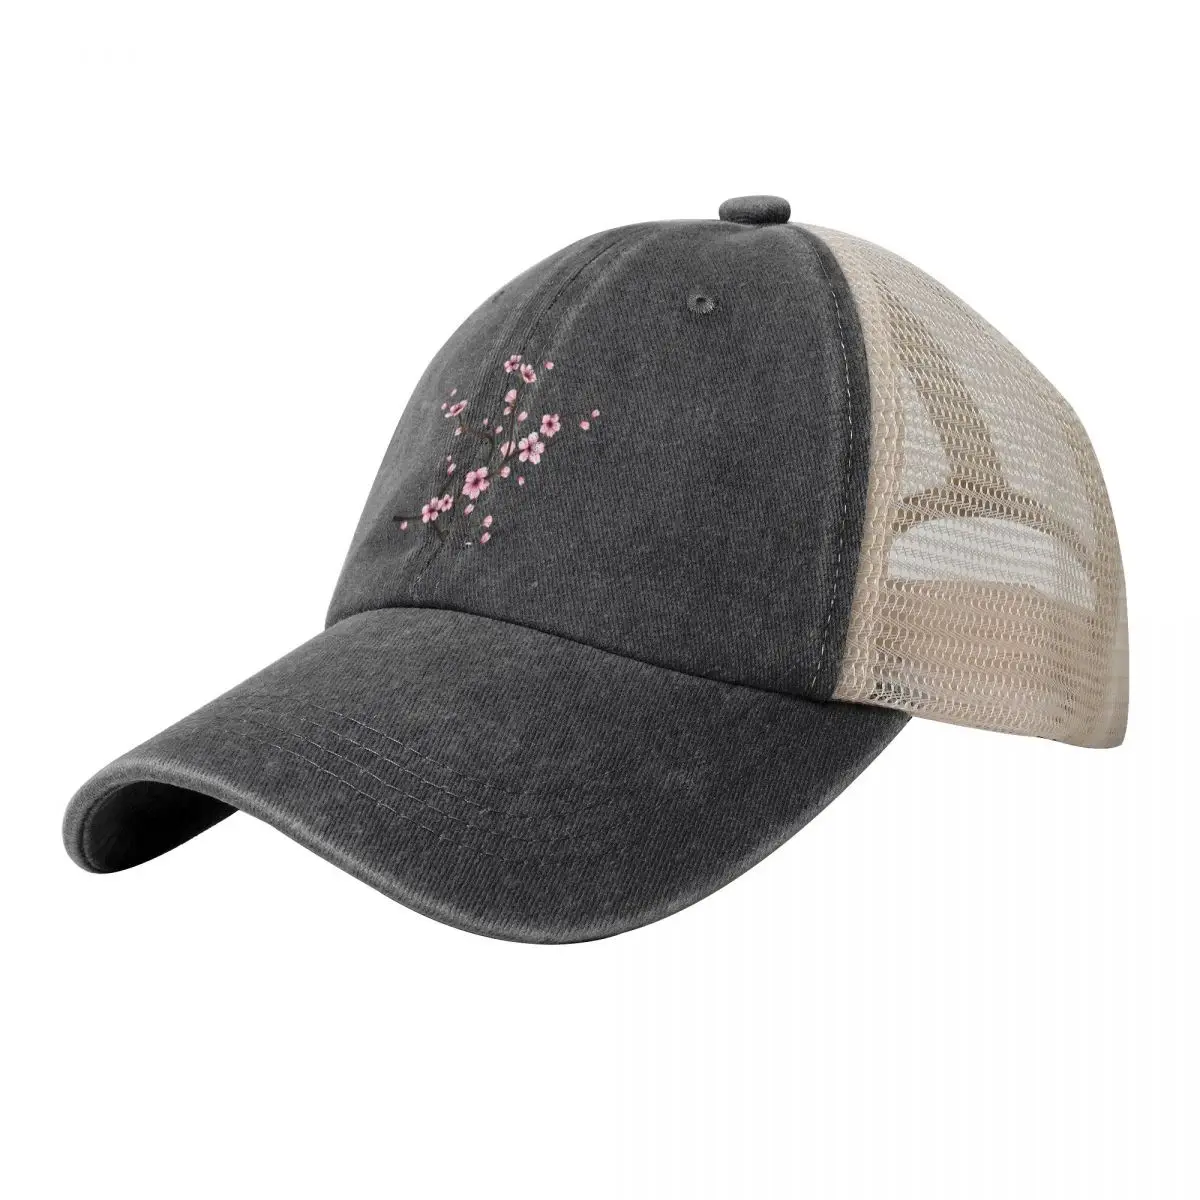 

Cherry Blossom Cowboy Mesh Baseball Cap birthday Sports Cap derby hat Brand Man cap Caps For Men Women's